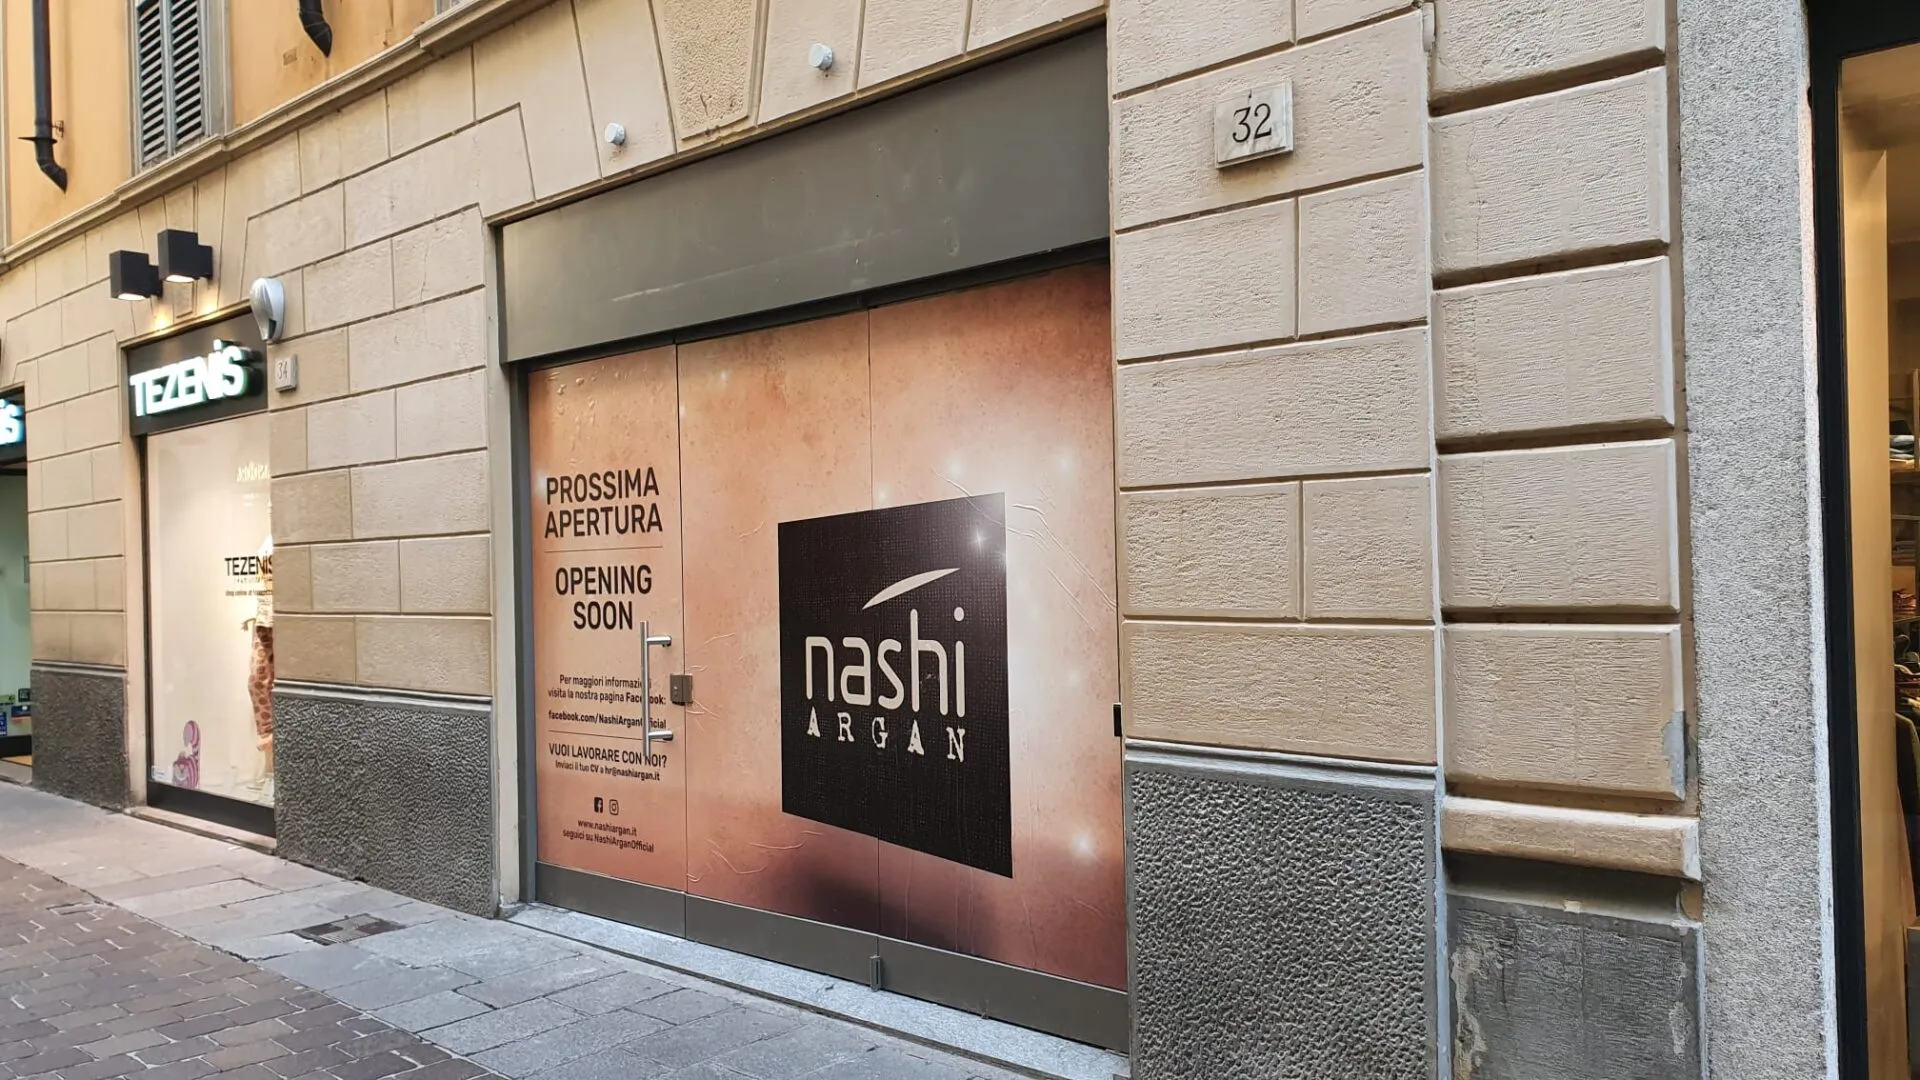 Nashi Argan Store Como in Italy, europe | Fragrance,Cosmetics - Country Helper